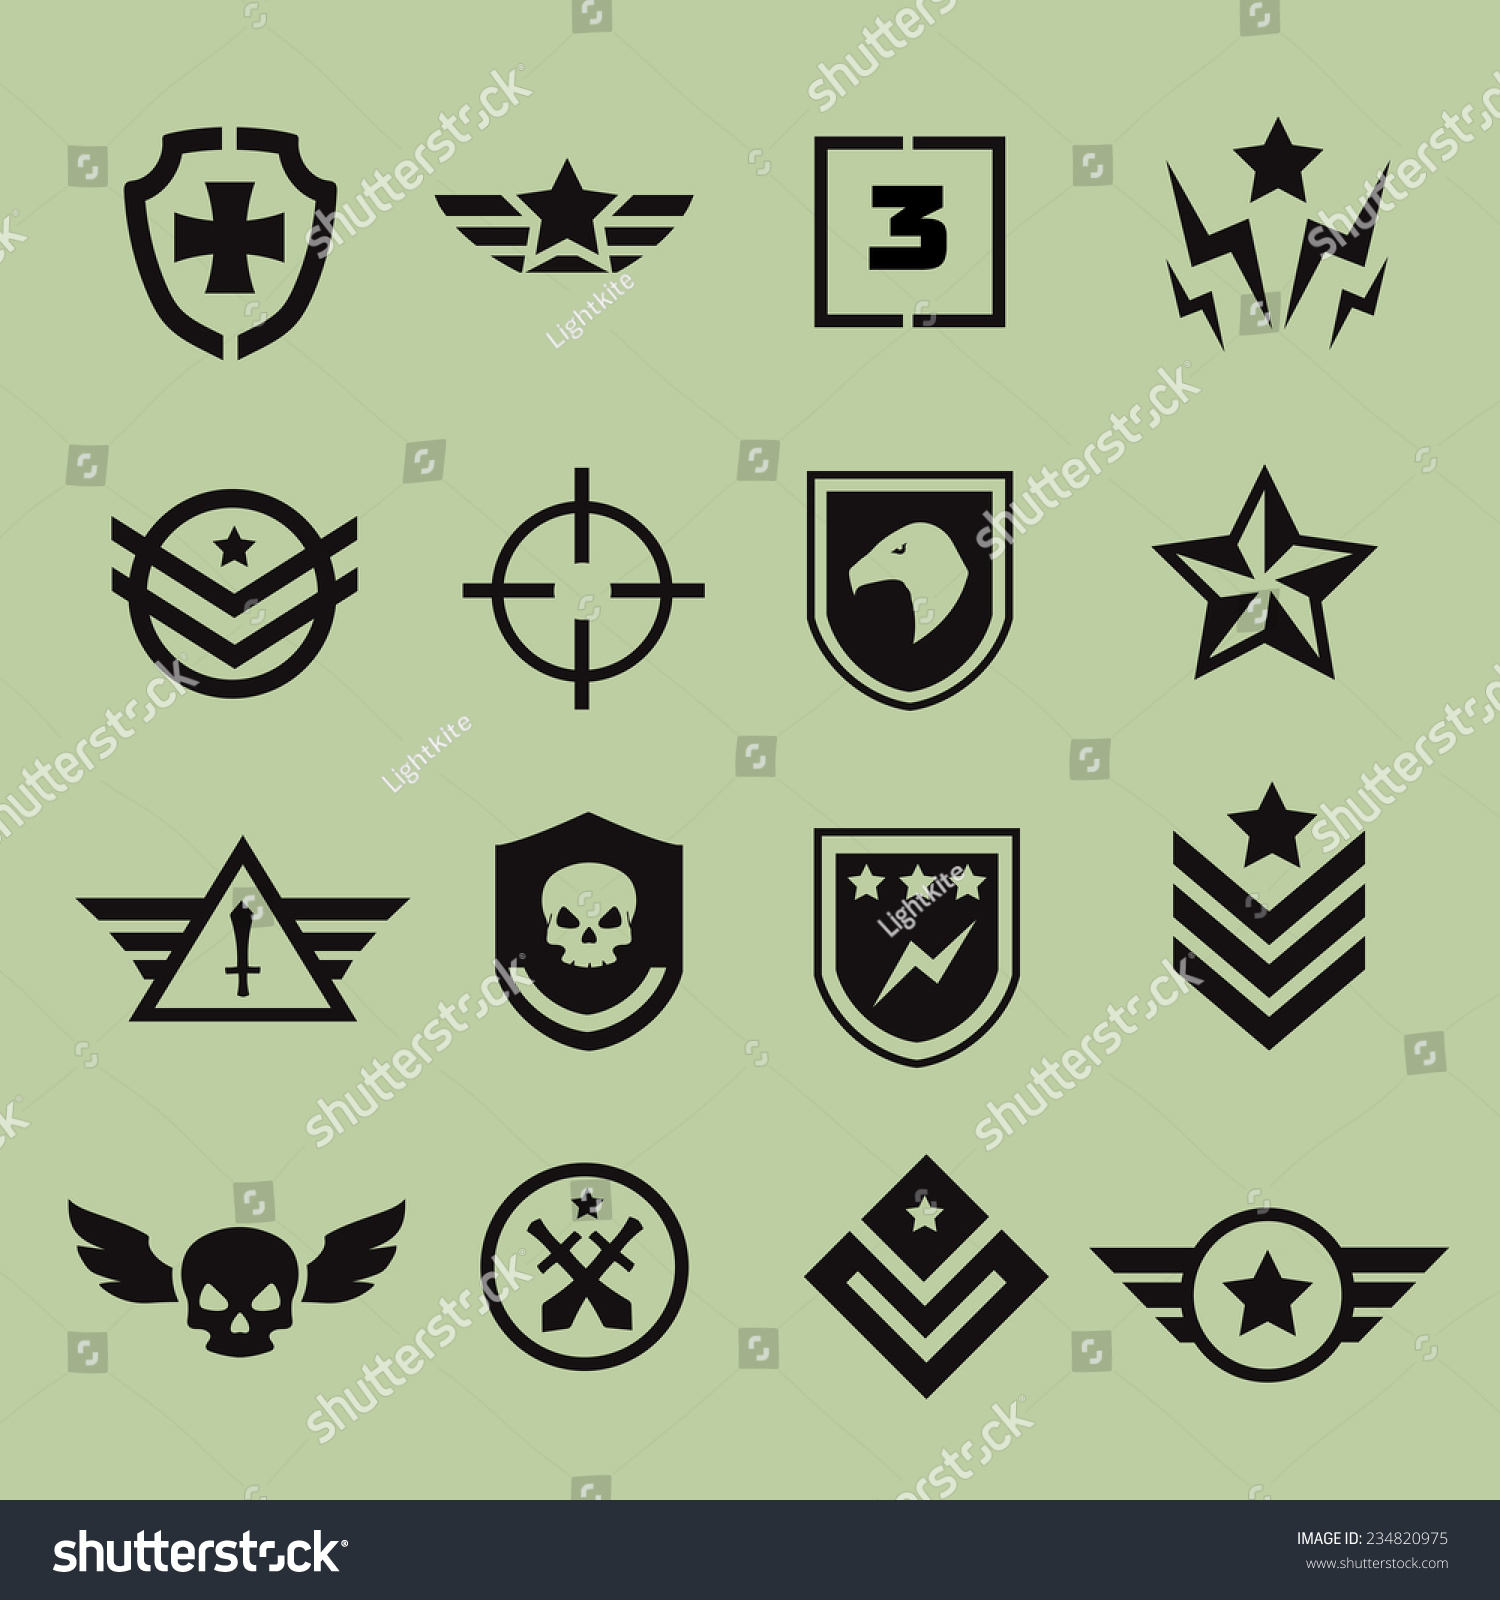 military symbology clip art - photo #11